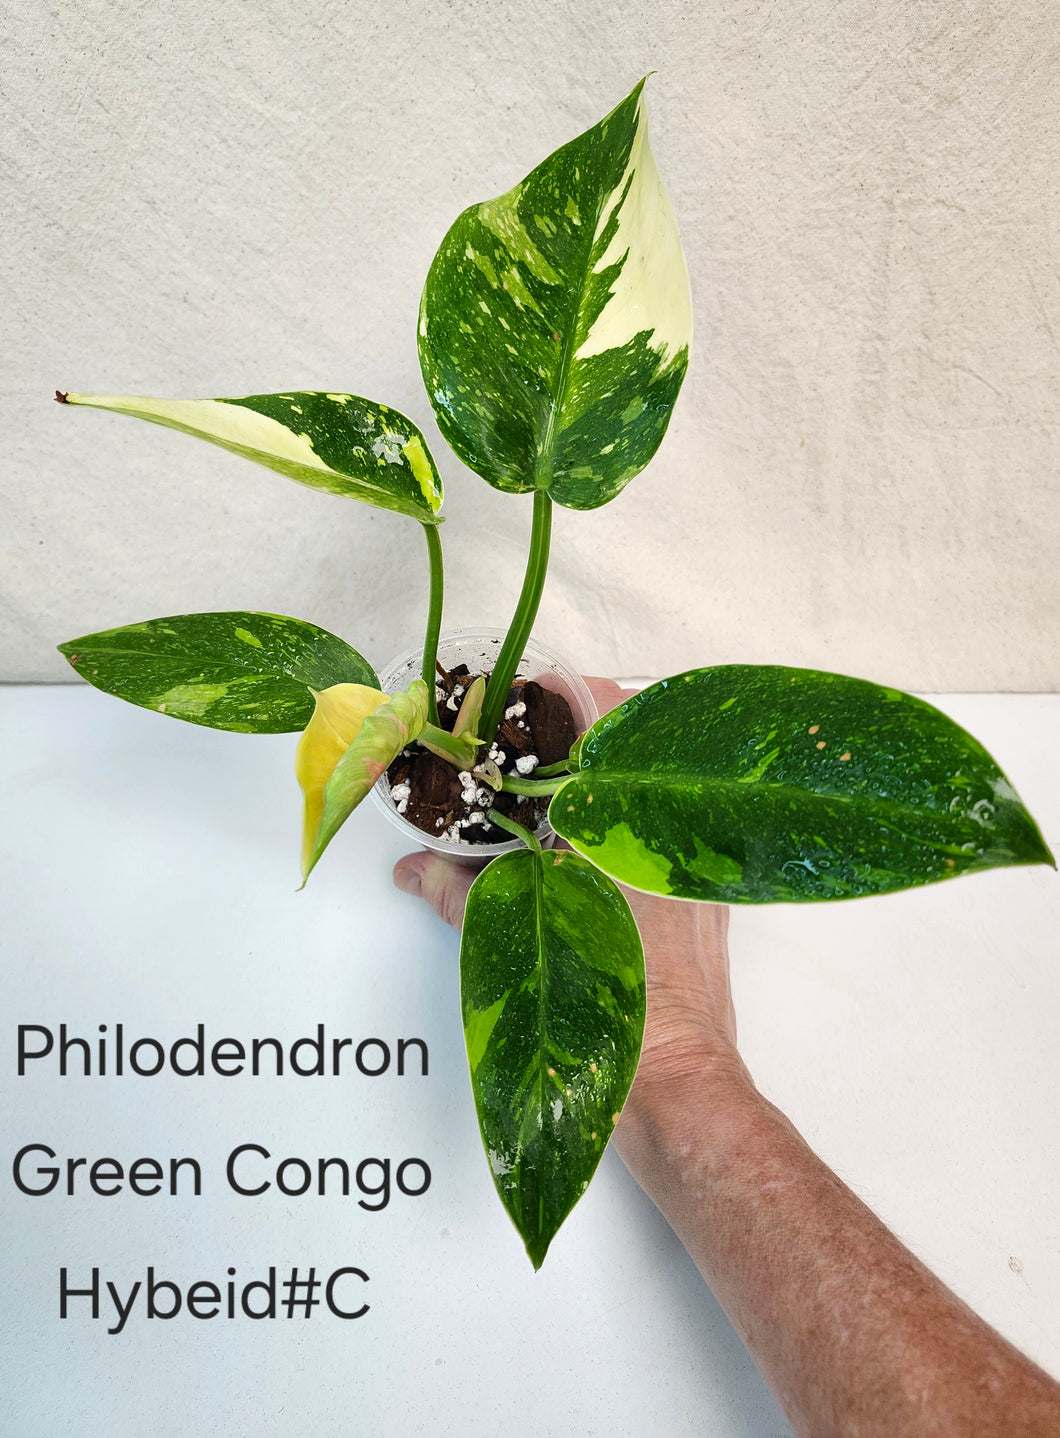 Philodendron green congo hybrid variegata #C